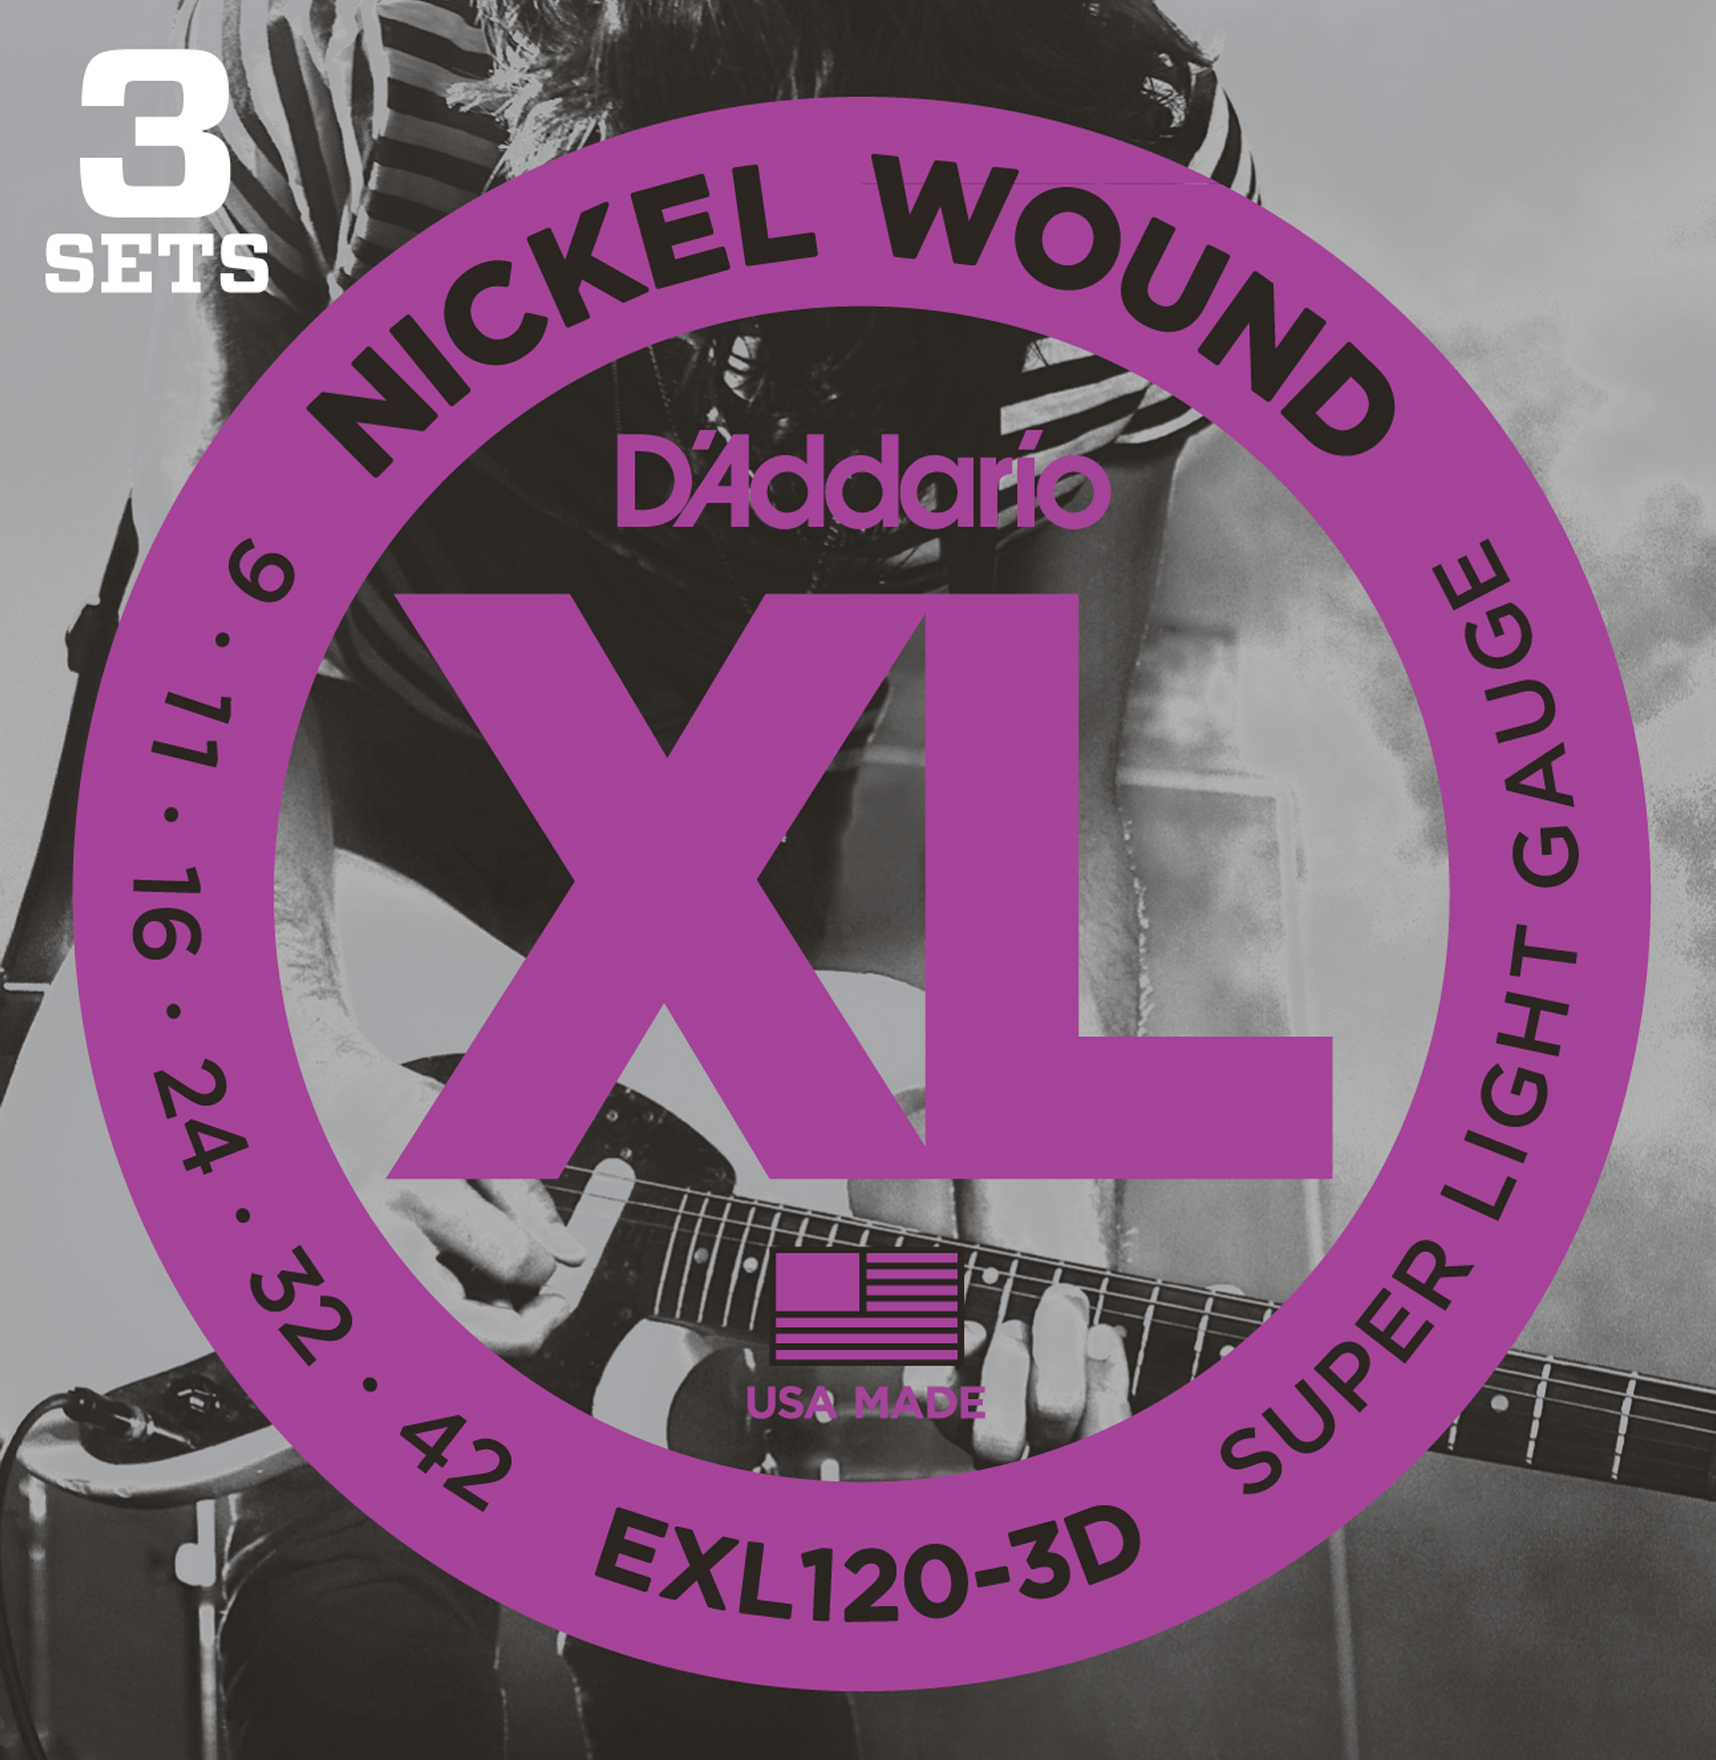 D'Addario XL Nickel Wound Electric Guitar Strings, 3-pack